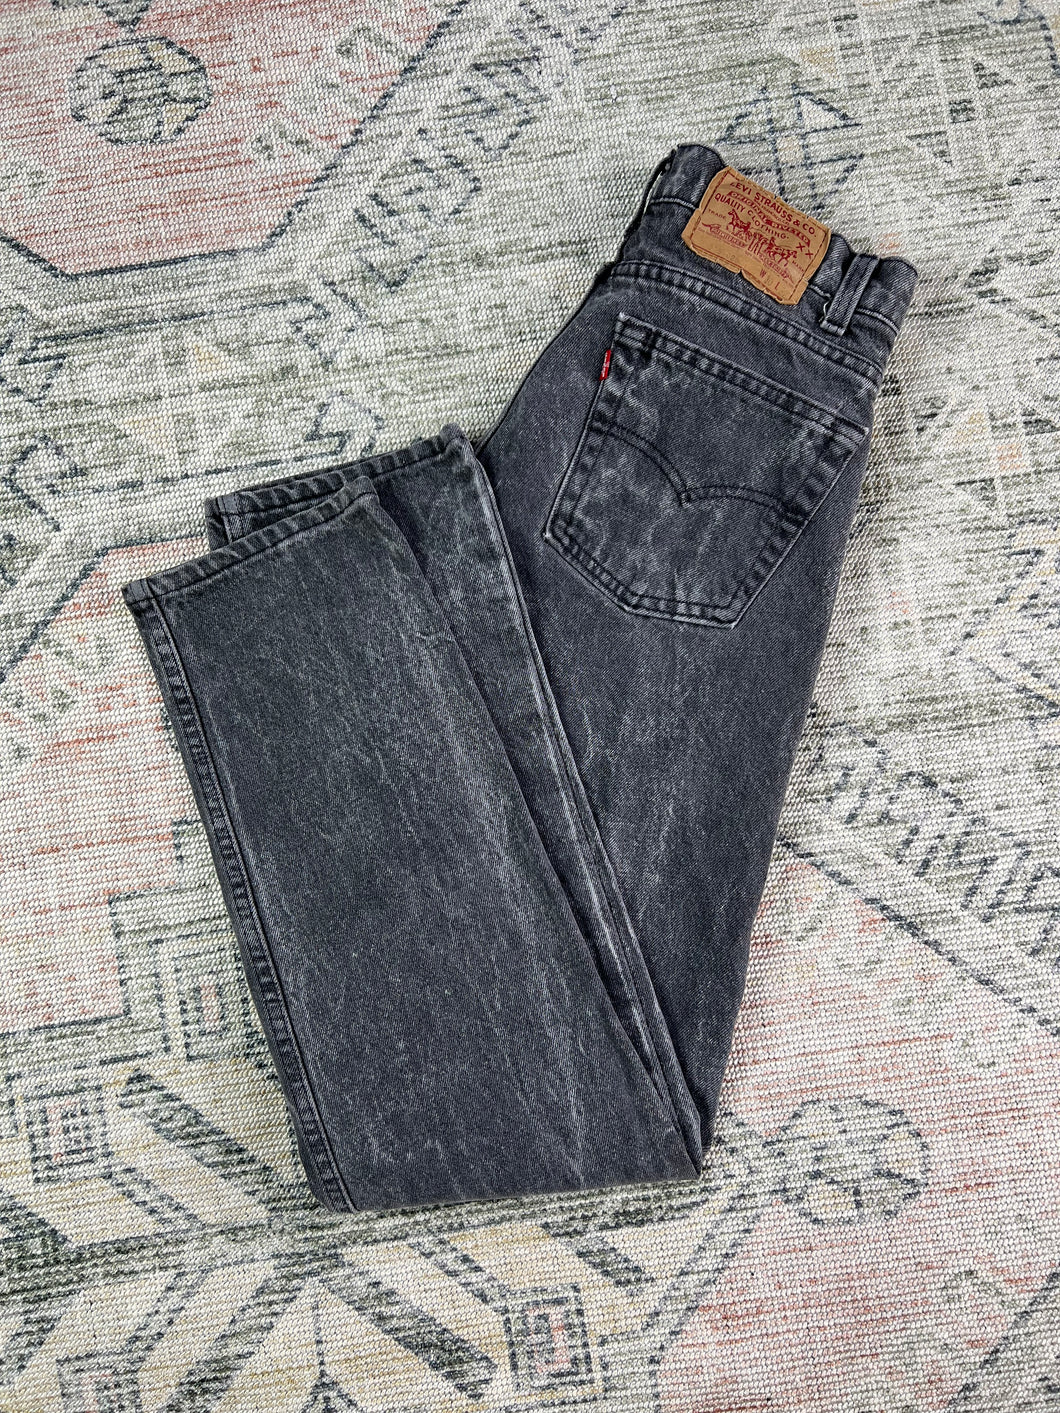 Vintage Faded Black Levi’s 505 Jeans (28x31)